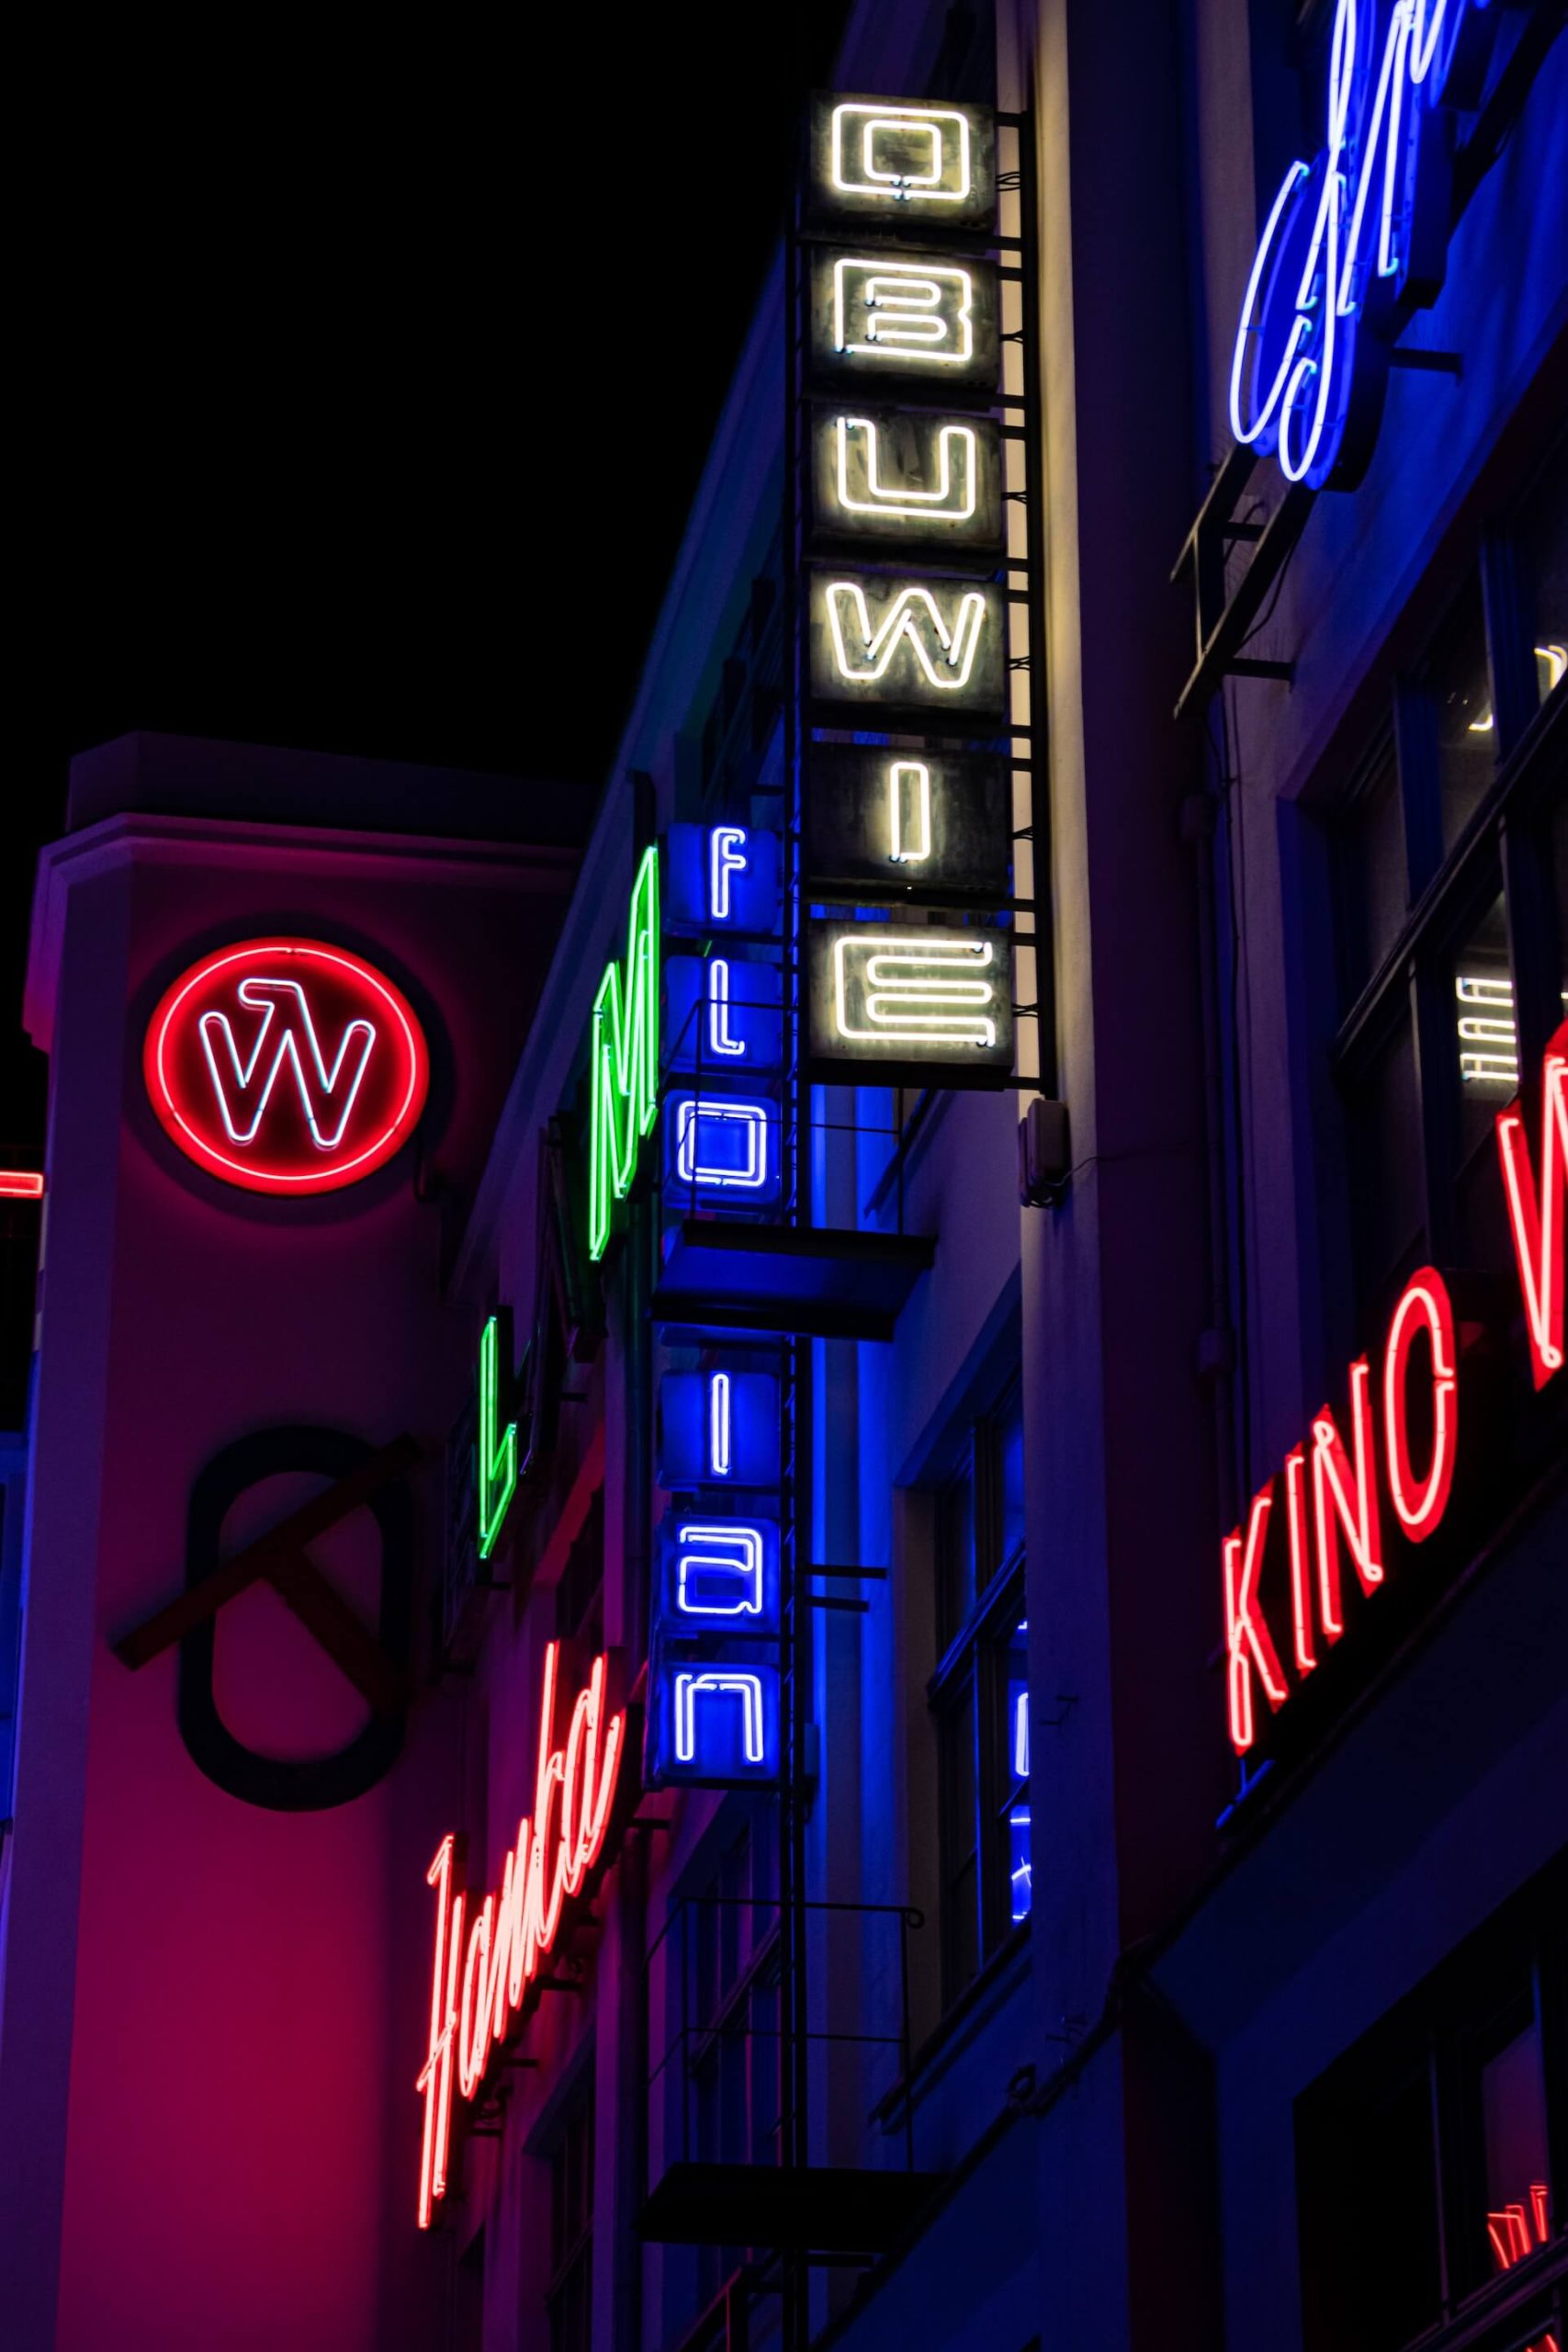 Hotell och klubbar i Wroclaw i samma byggnad.